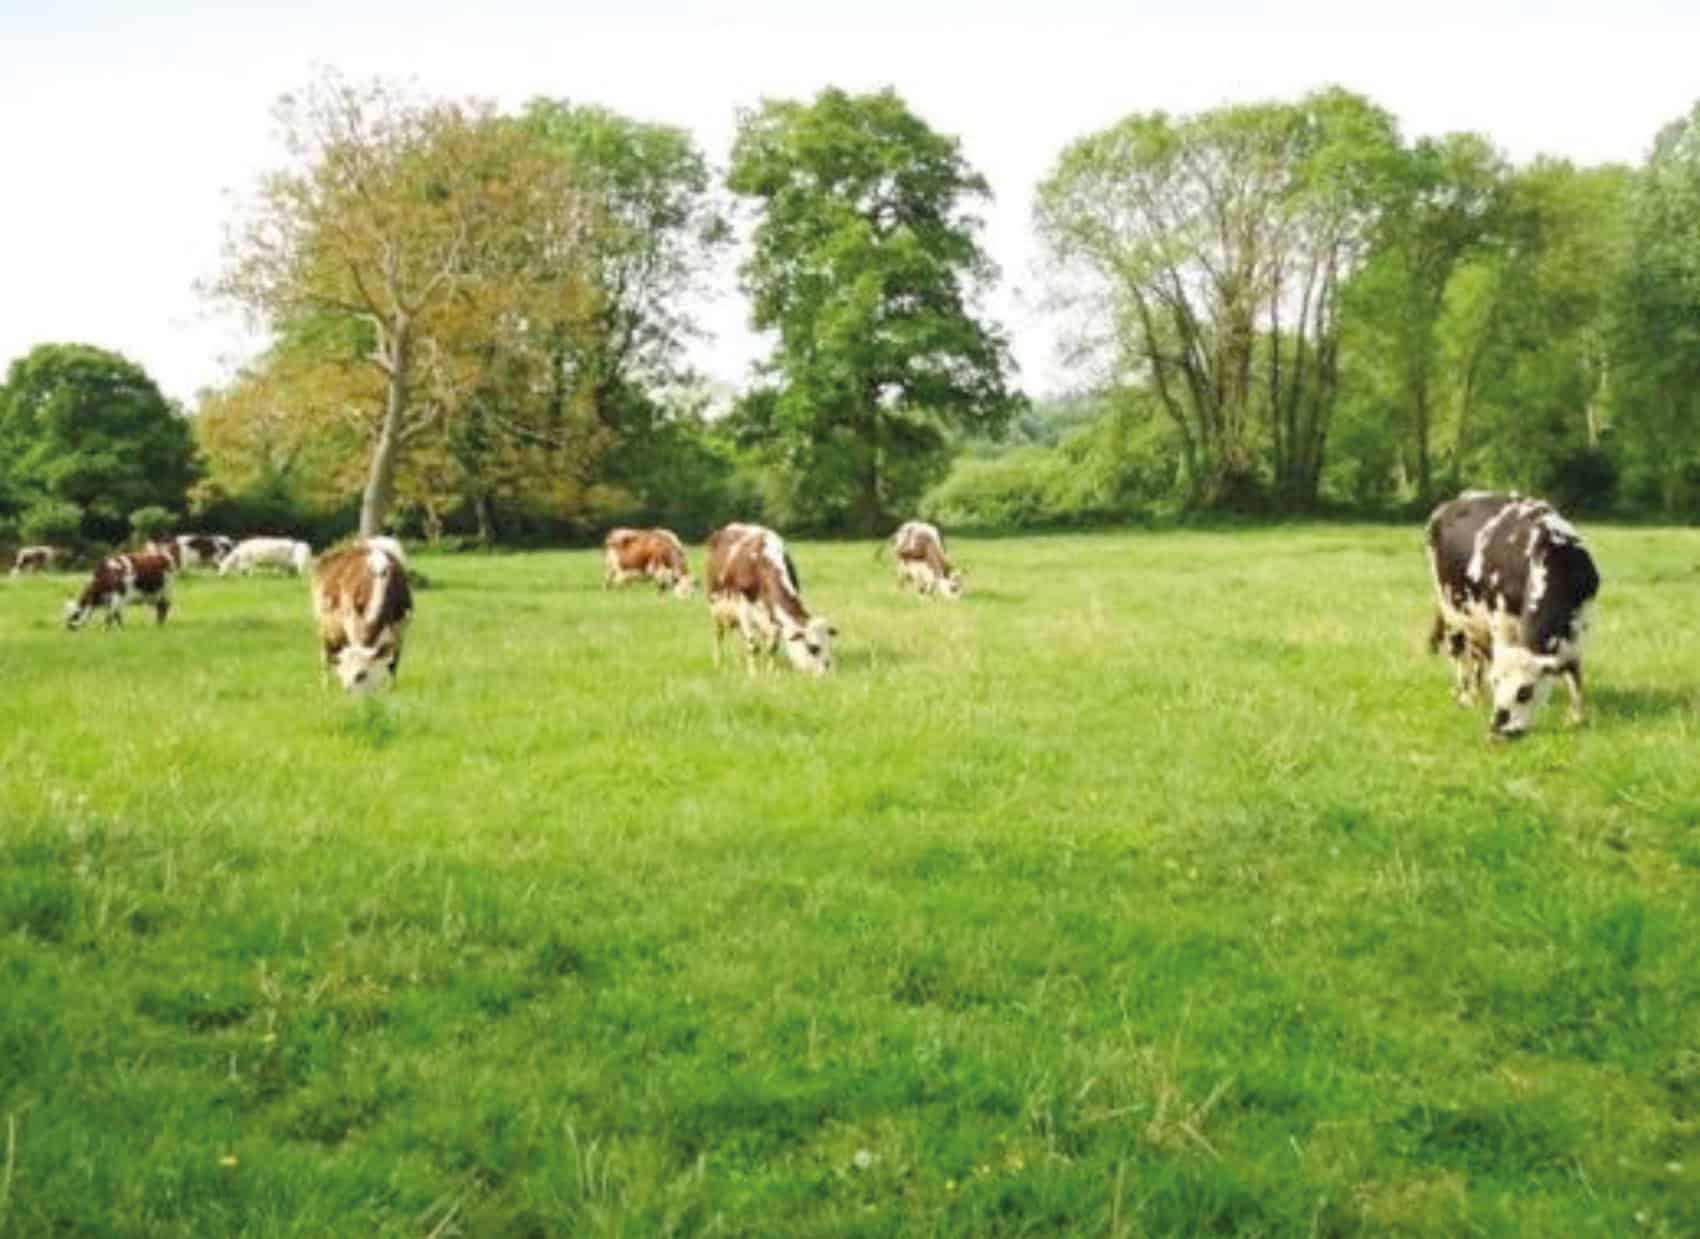 Cows grazing on field